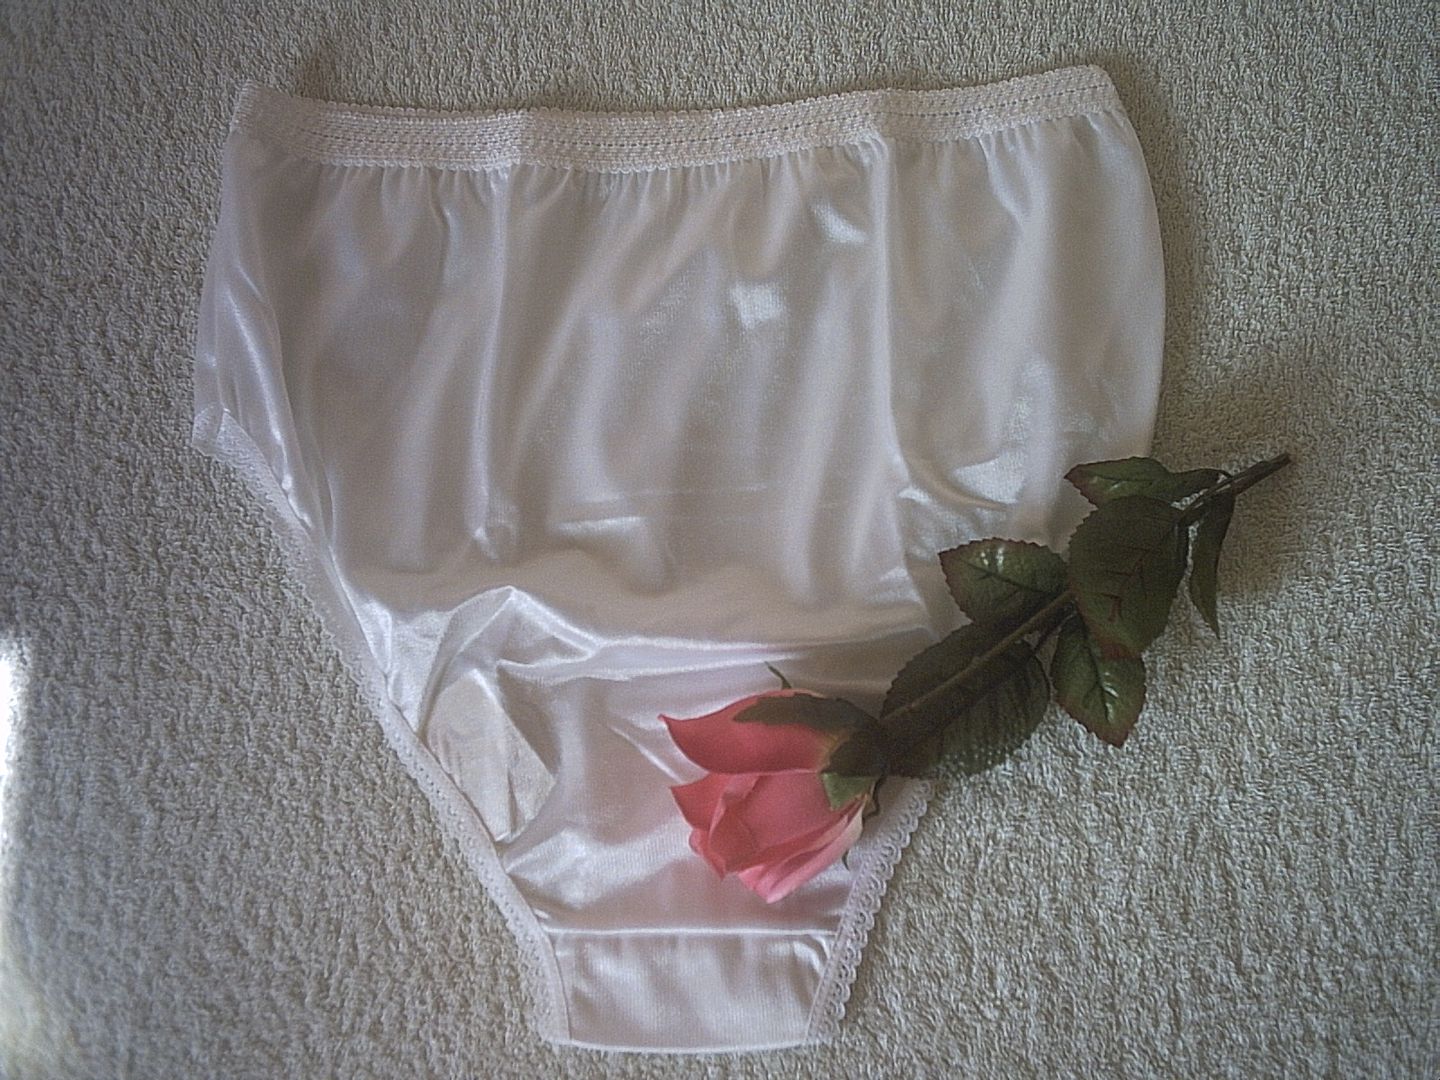 Gorgeous Pure White Full Soft Silky Nylon Satin Panties Knickers Os Ebay 6507